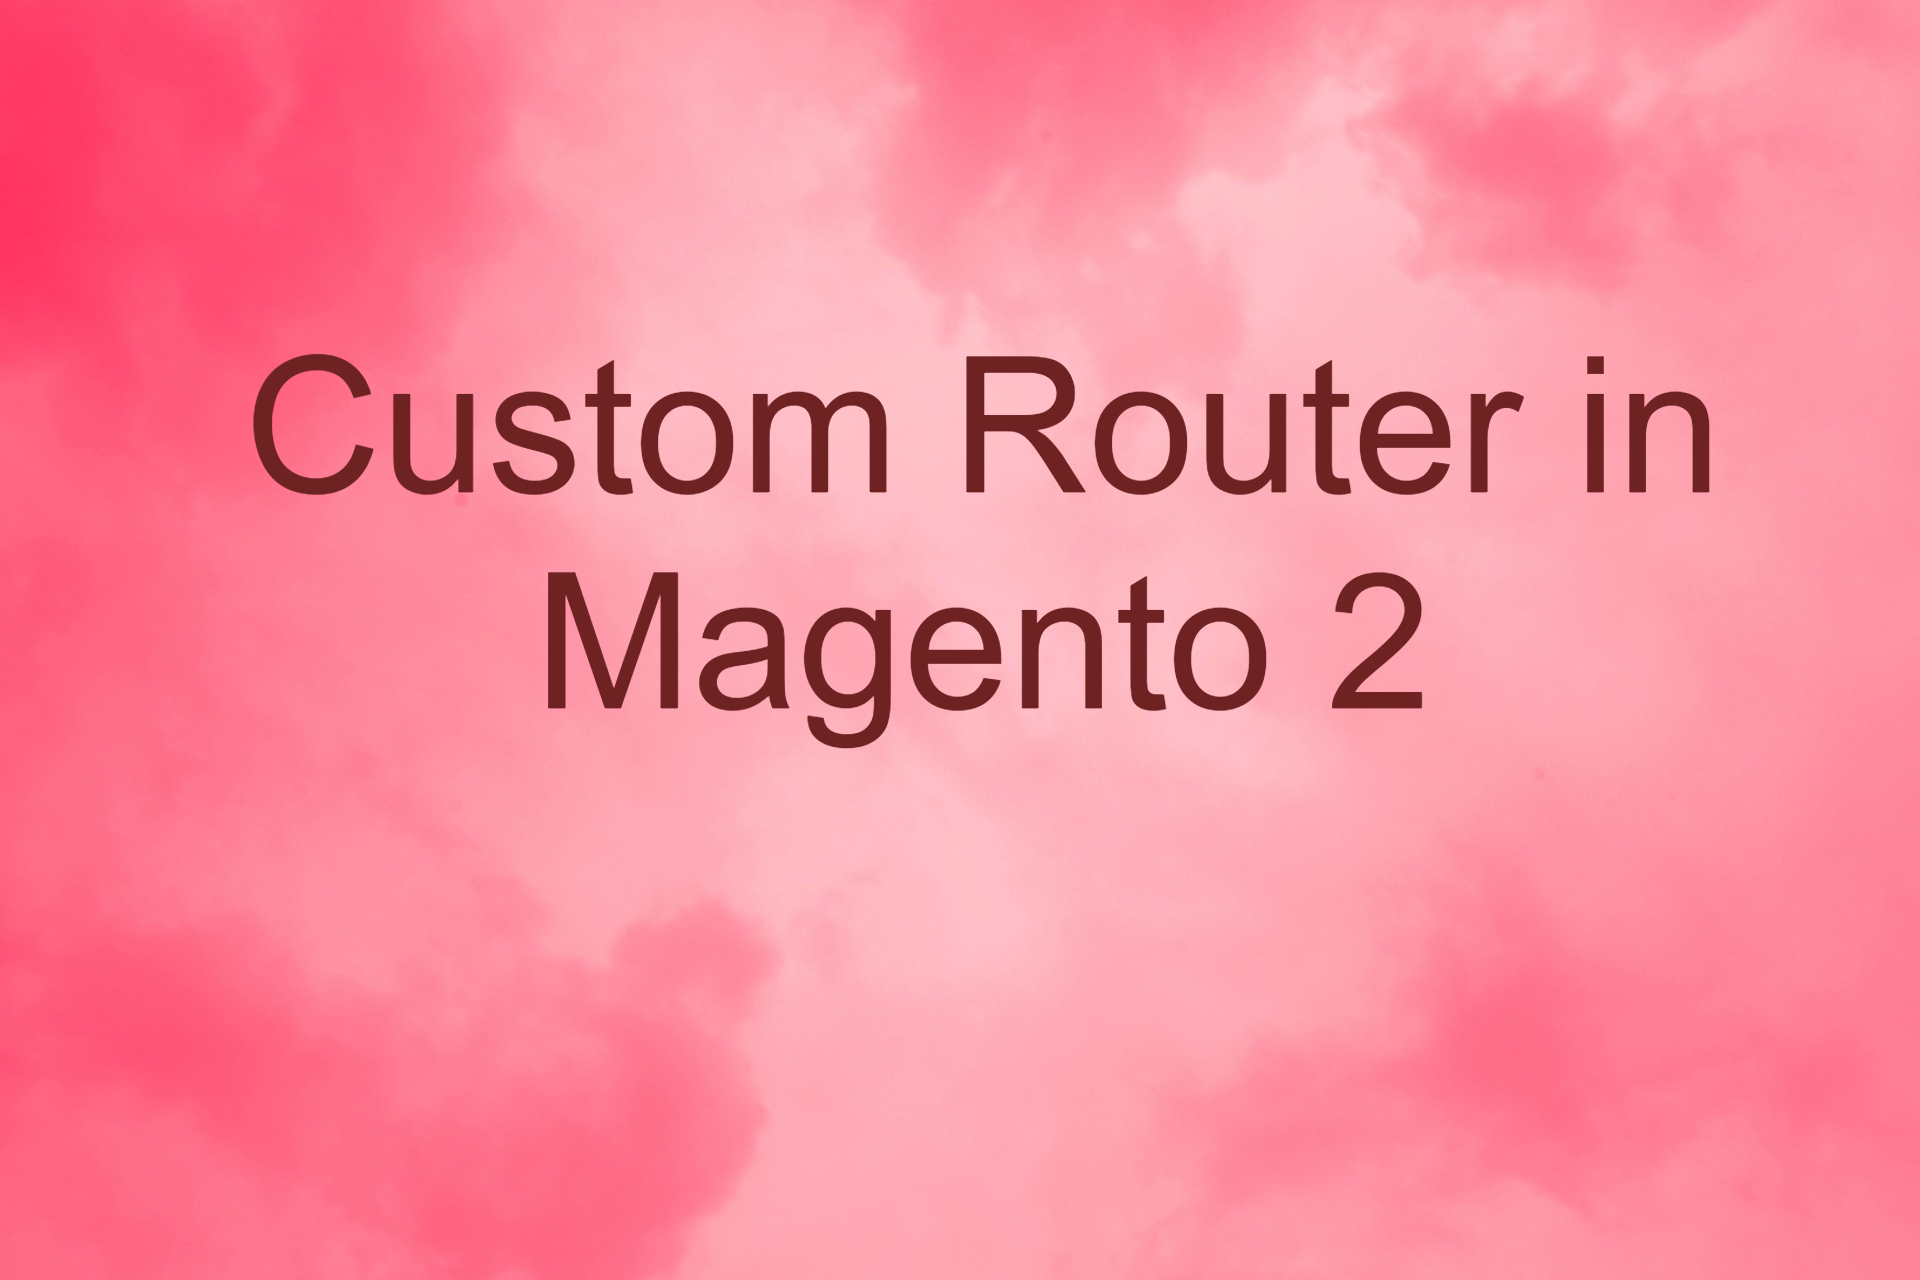 Custom Router In Magento 2